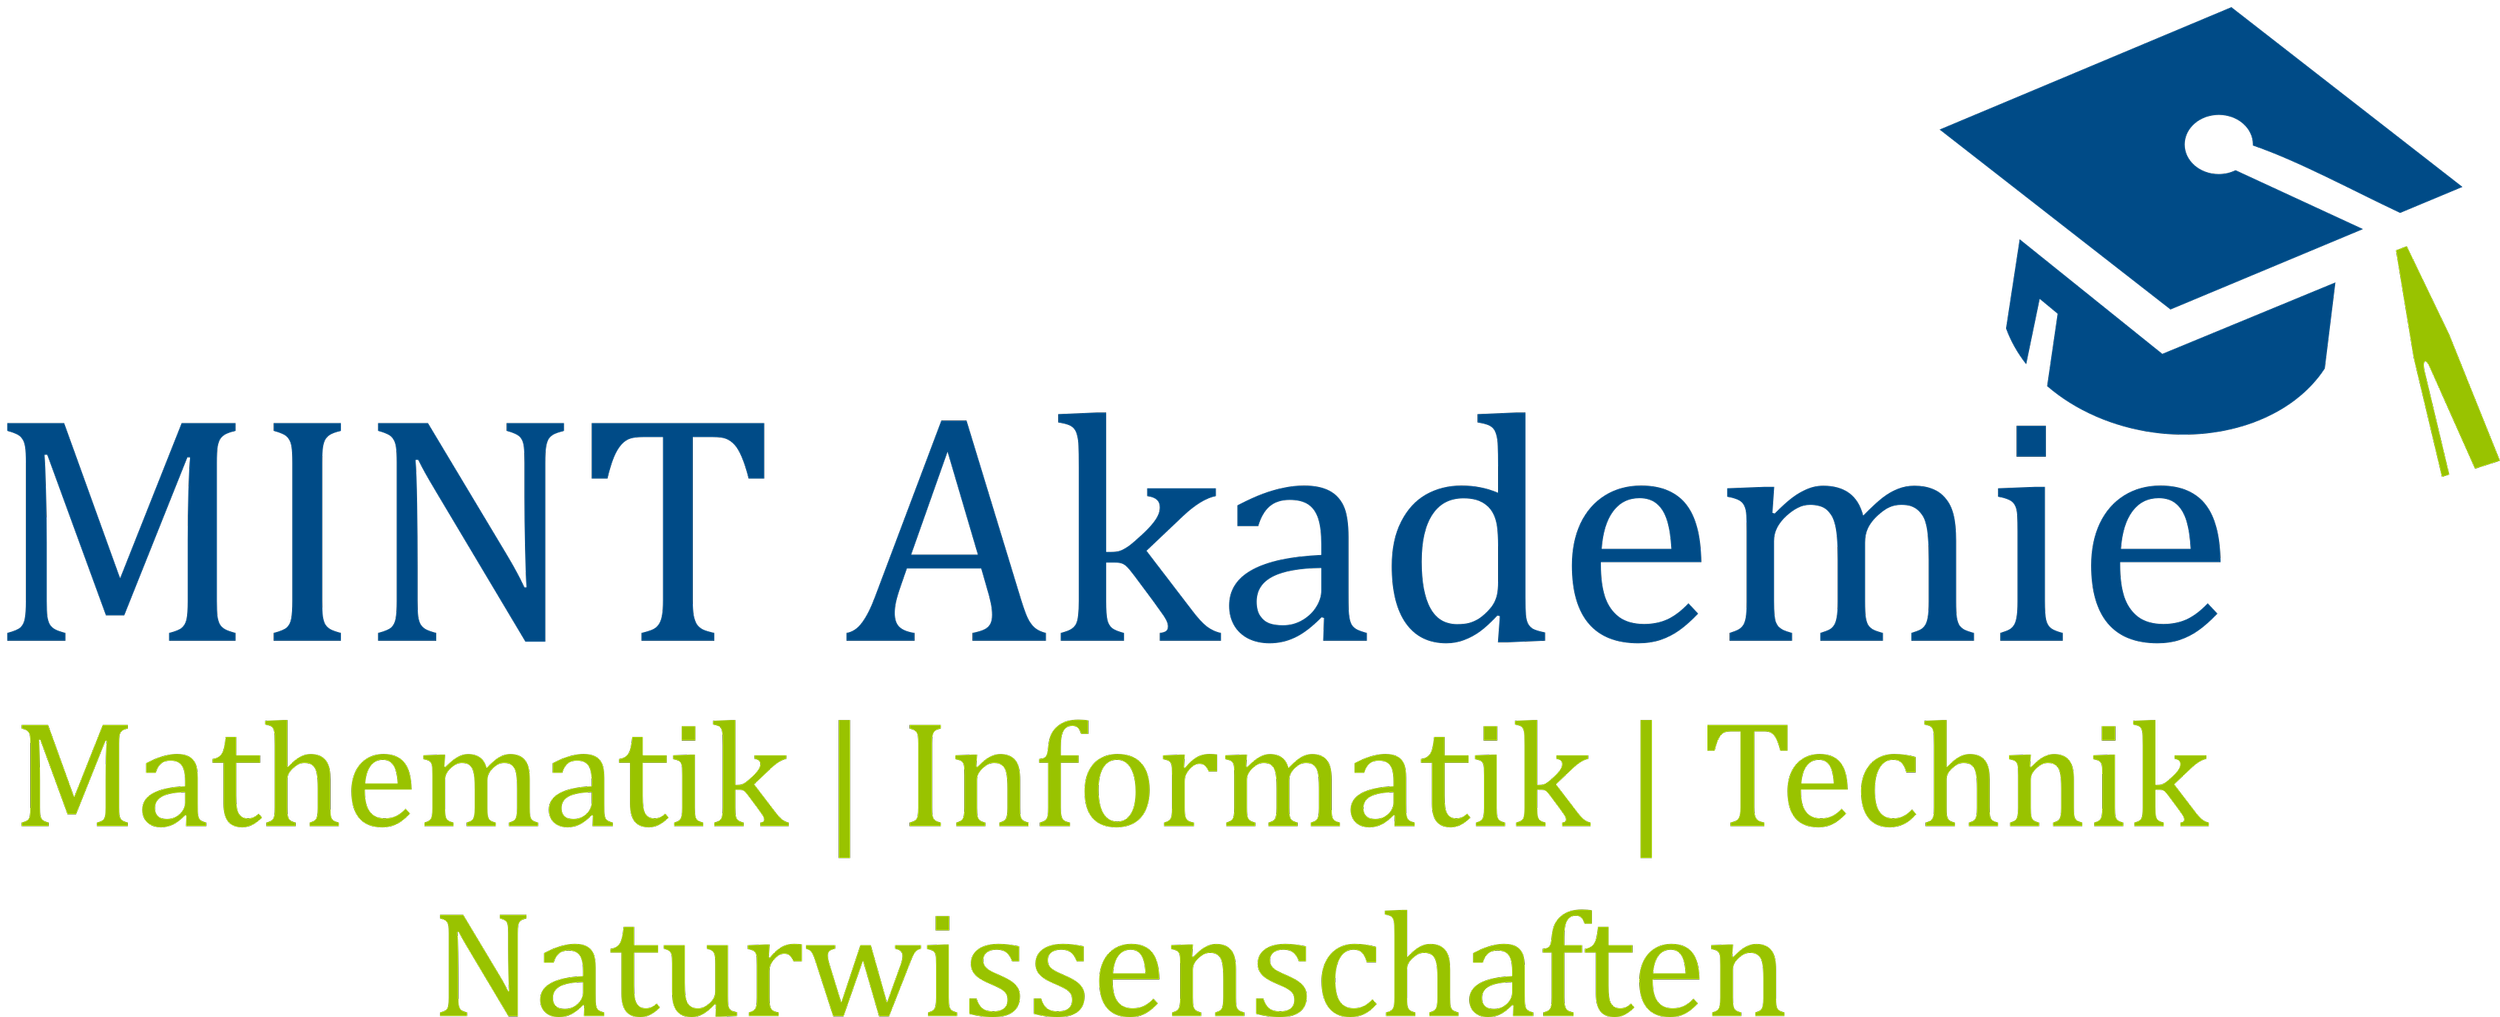 Logo_MINT_Akademie_ohne_datum.png